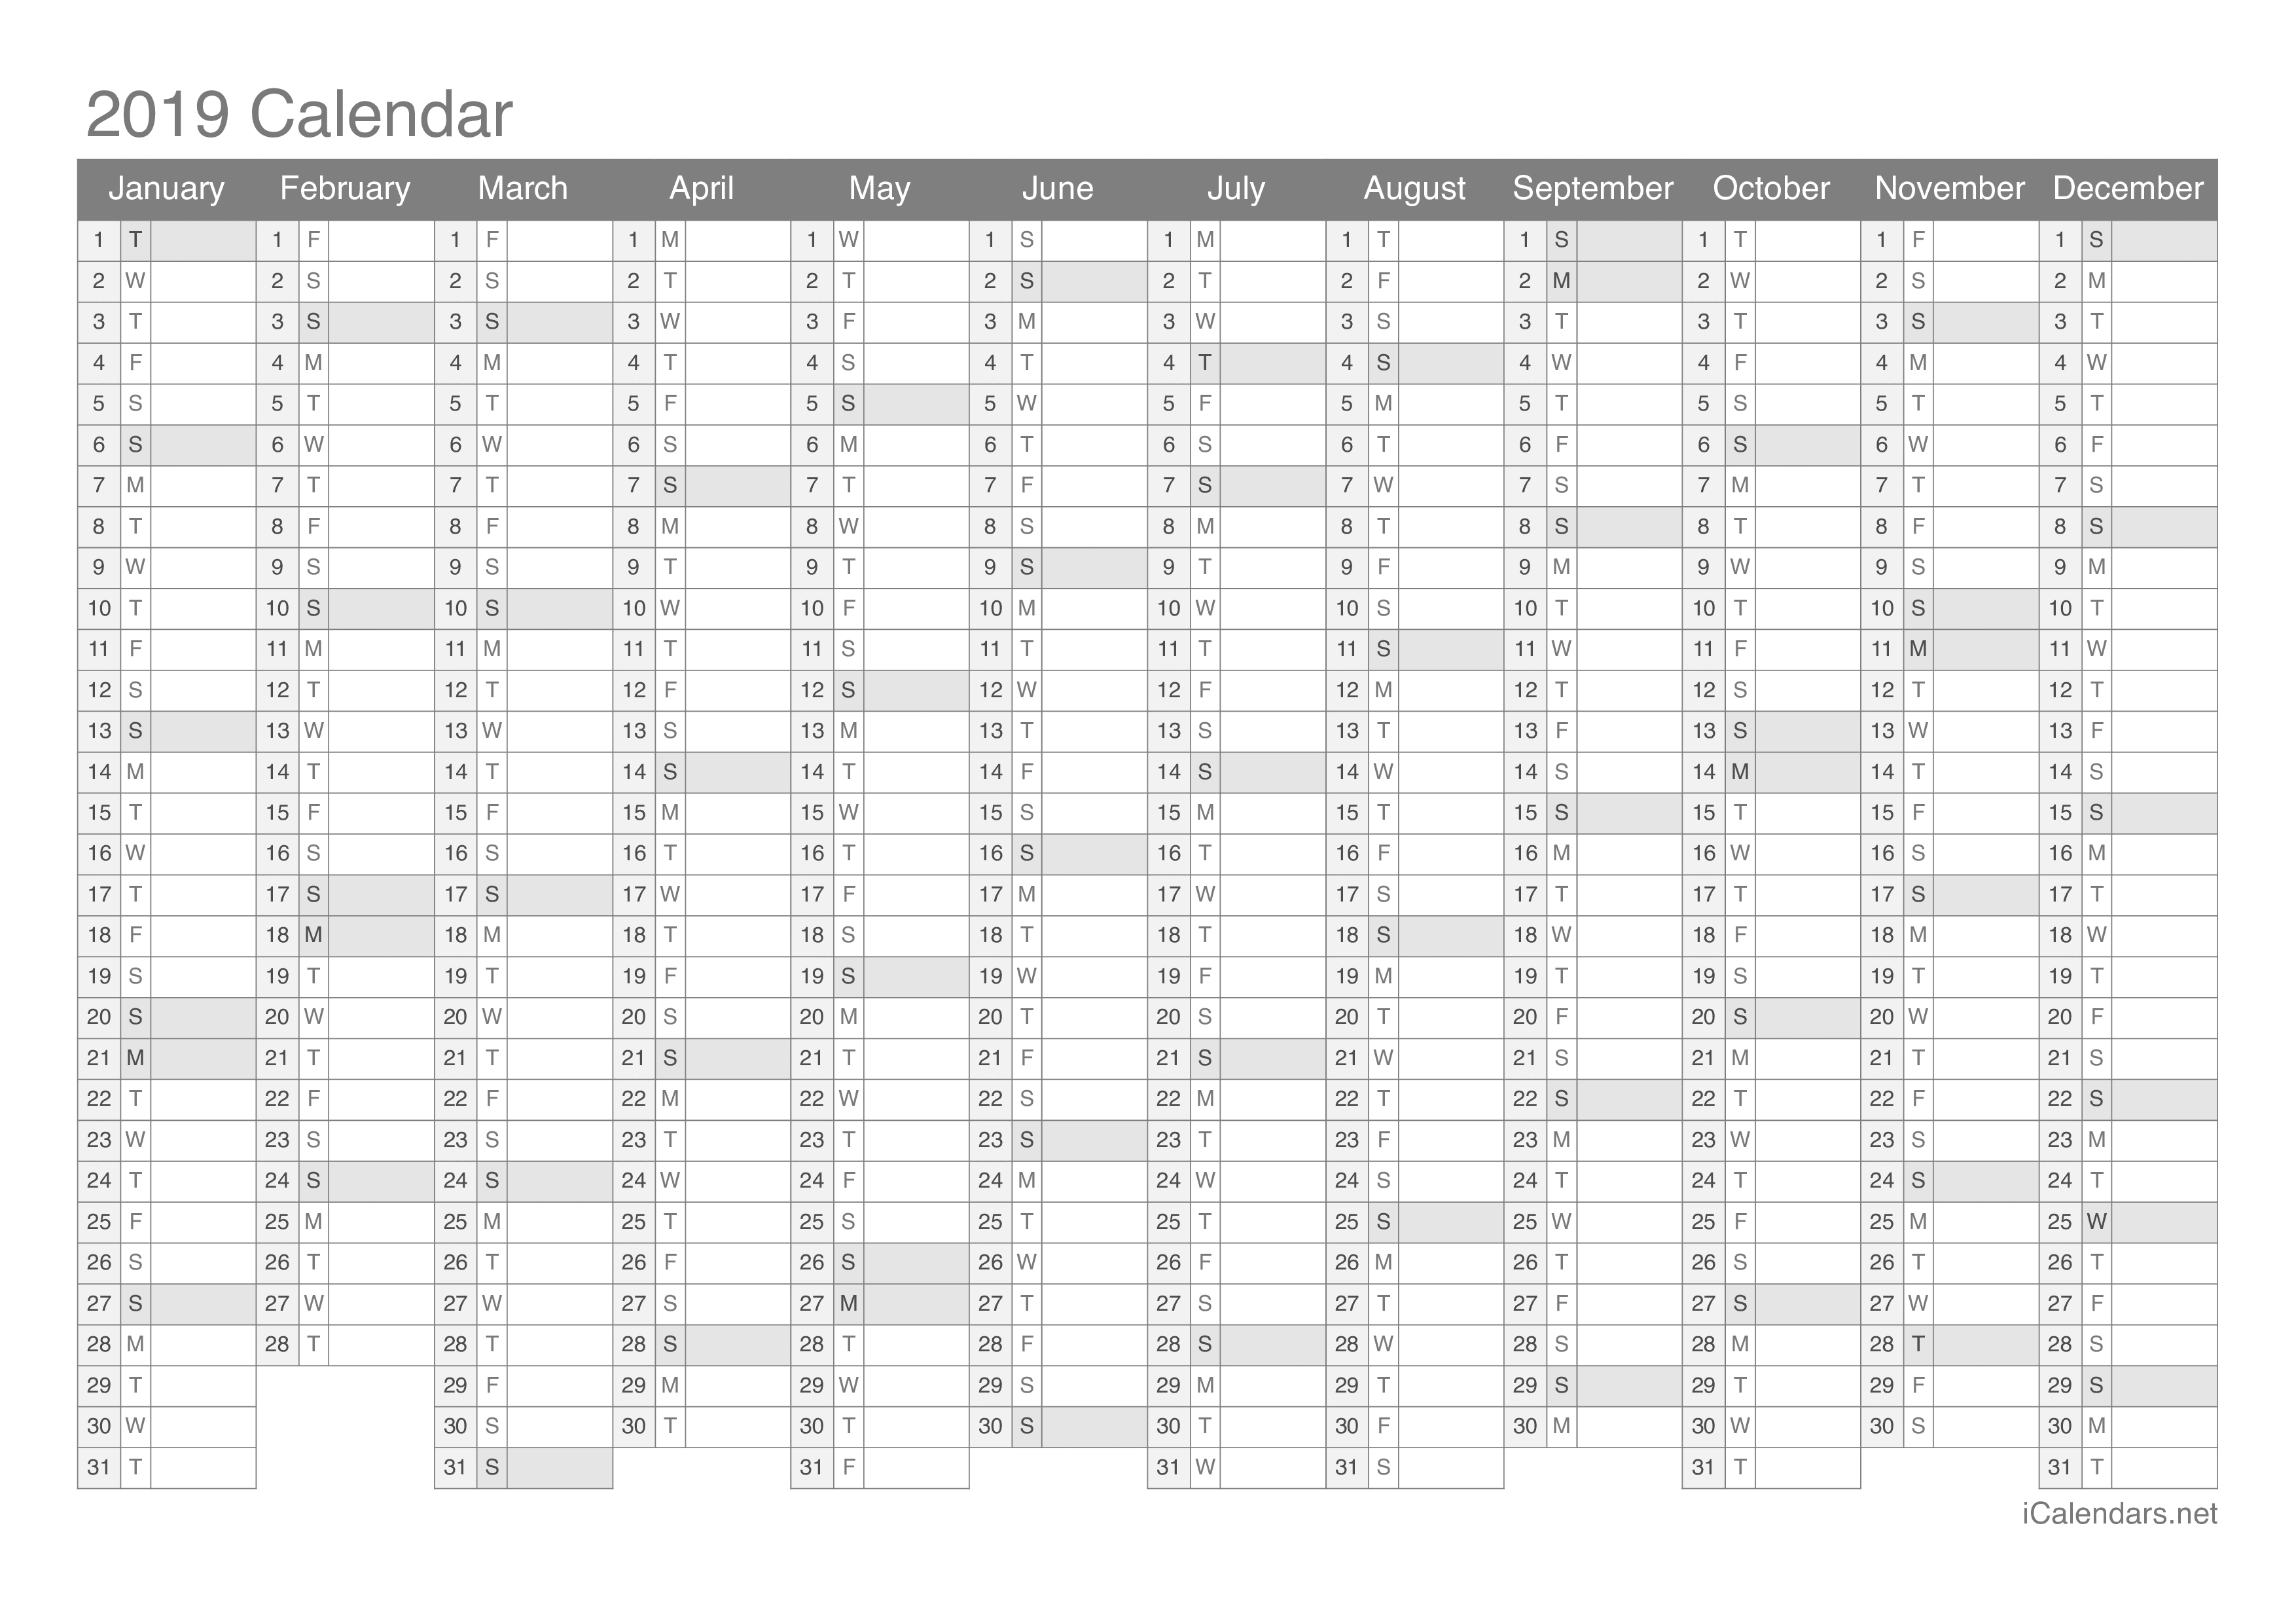 Printable Calendar PDF or Excel - icalendars.net